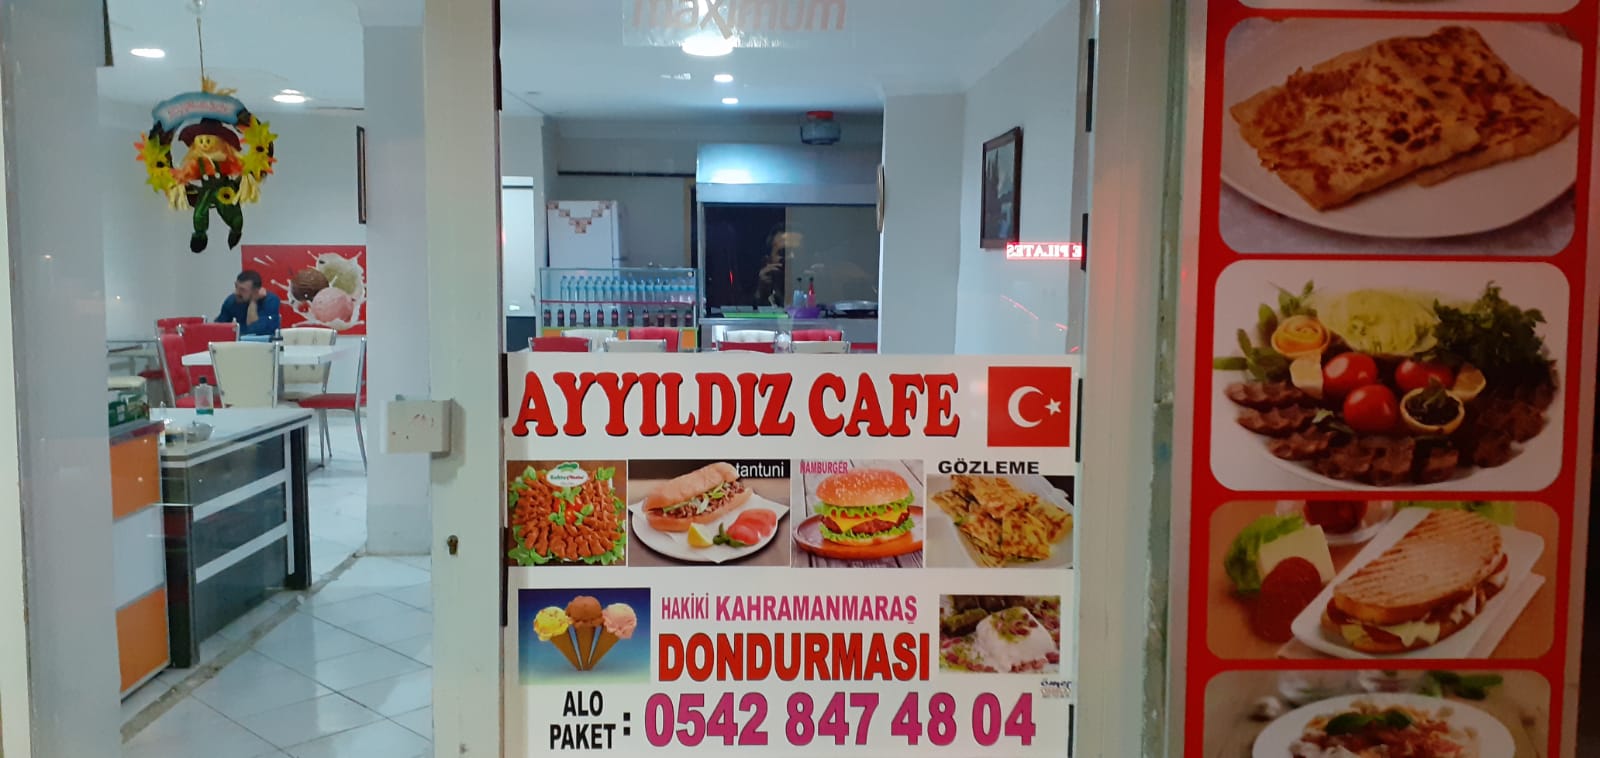  AYYILDIZ CAFE FASTFOOD DONDURMA